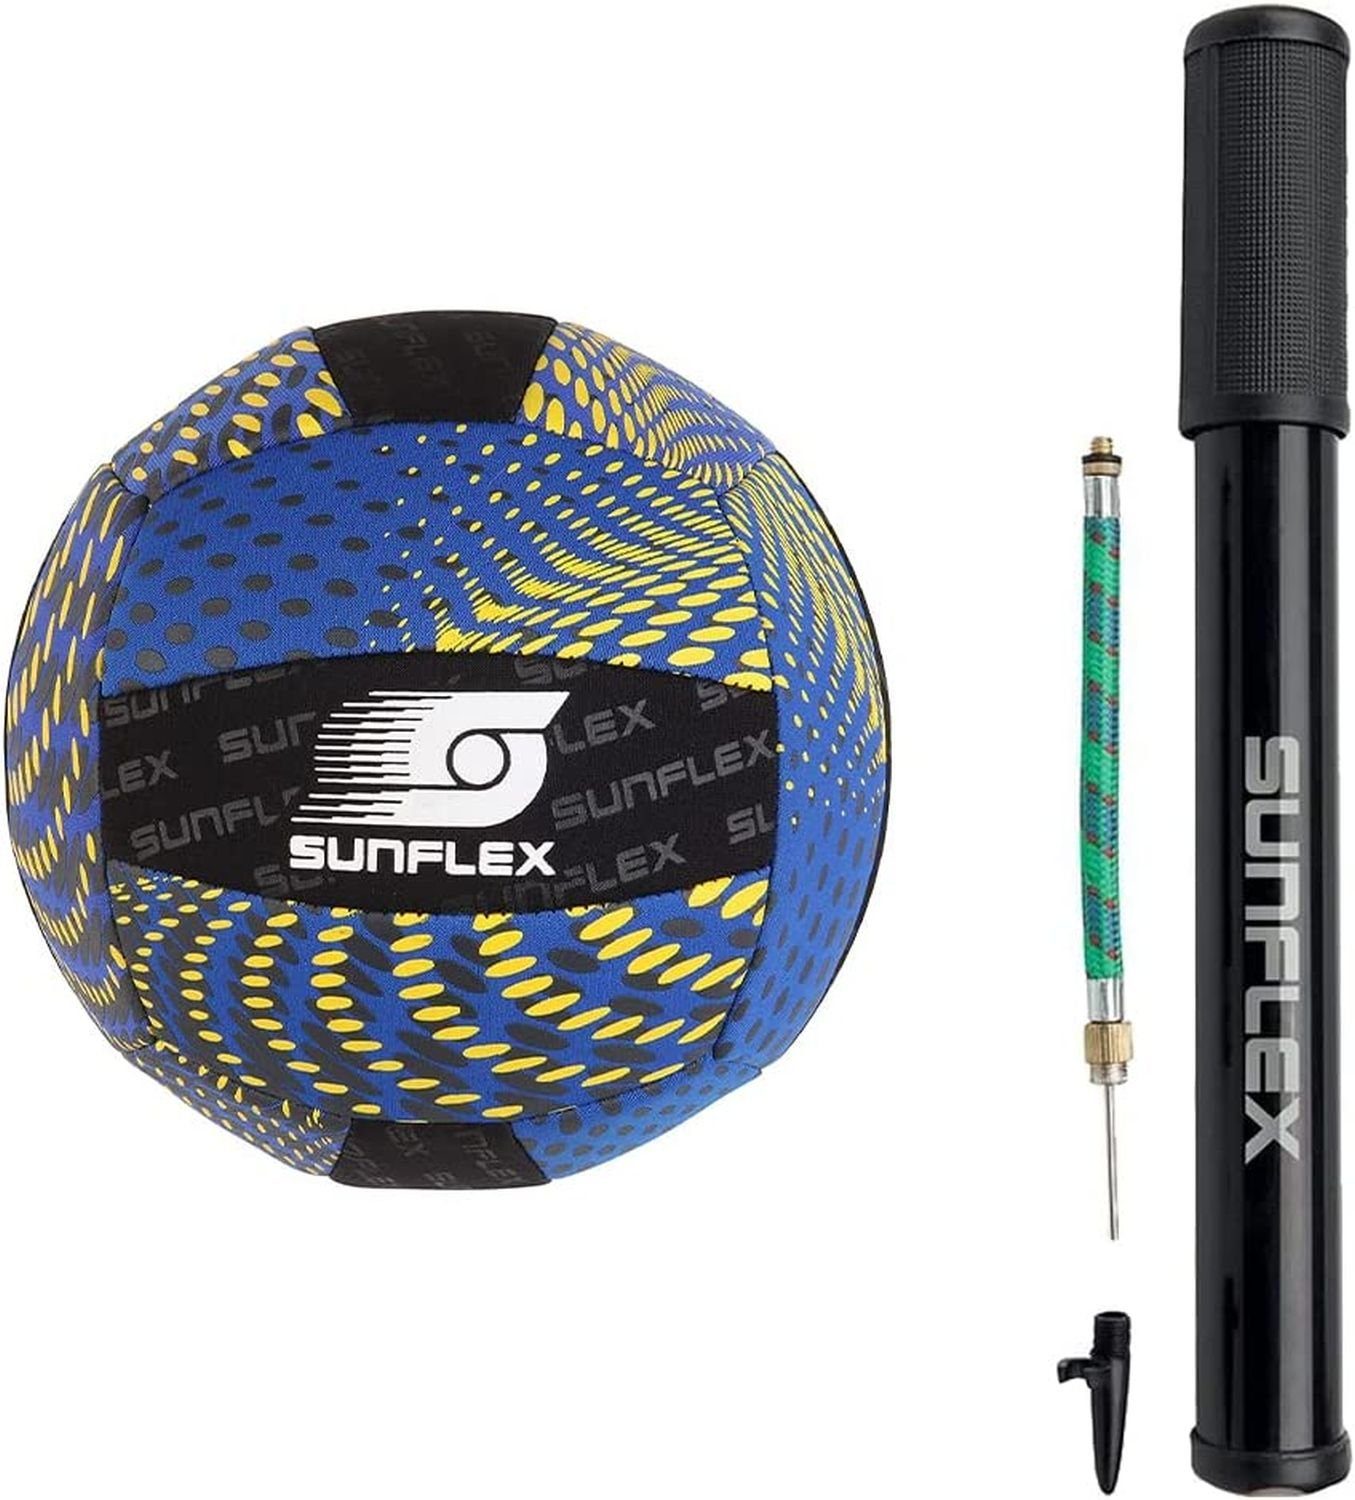 inkl. Sunflex blau Pumpe Größe Beachball Ball Splash 5